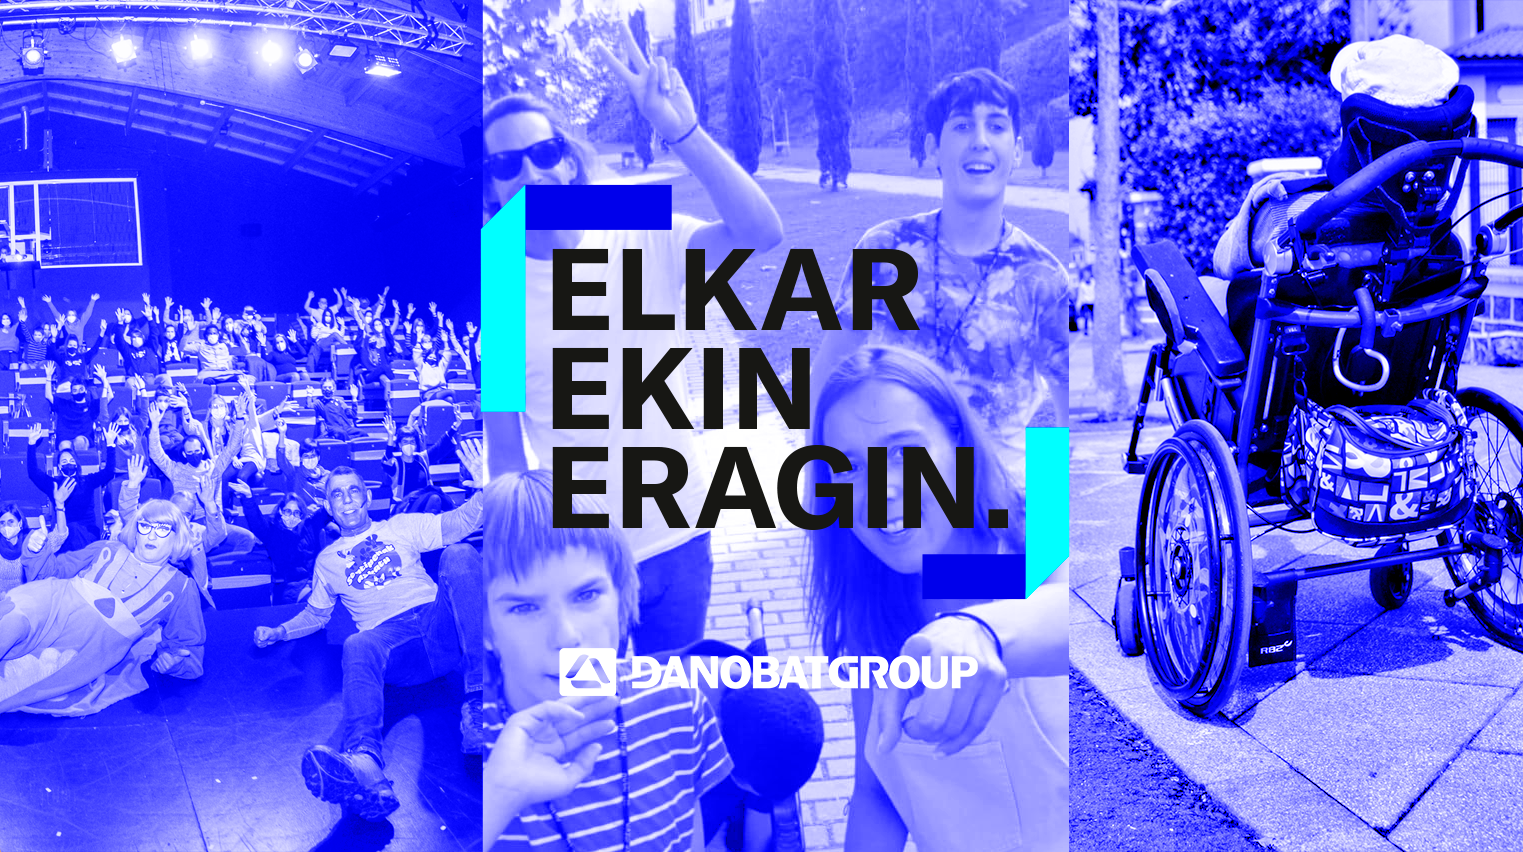 Danobatgroup to support its social cooperation programme “Elkarrekin Eragin” with 600,000 euros